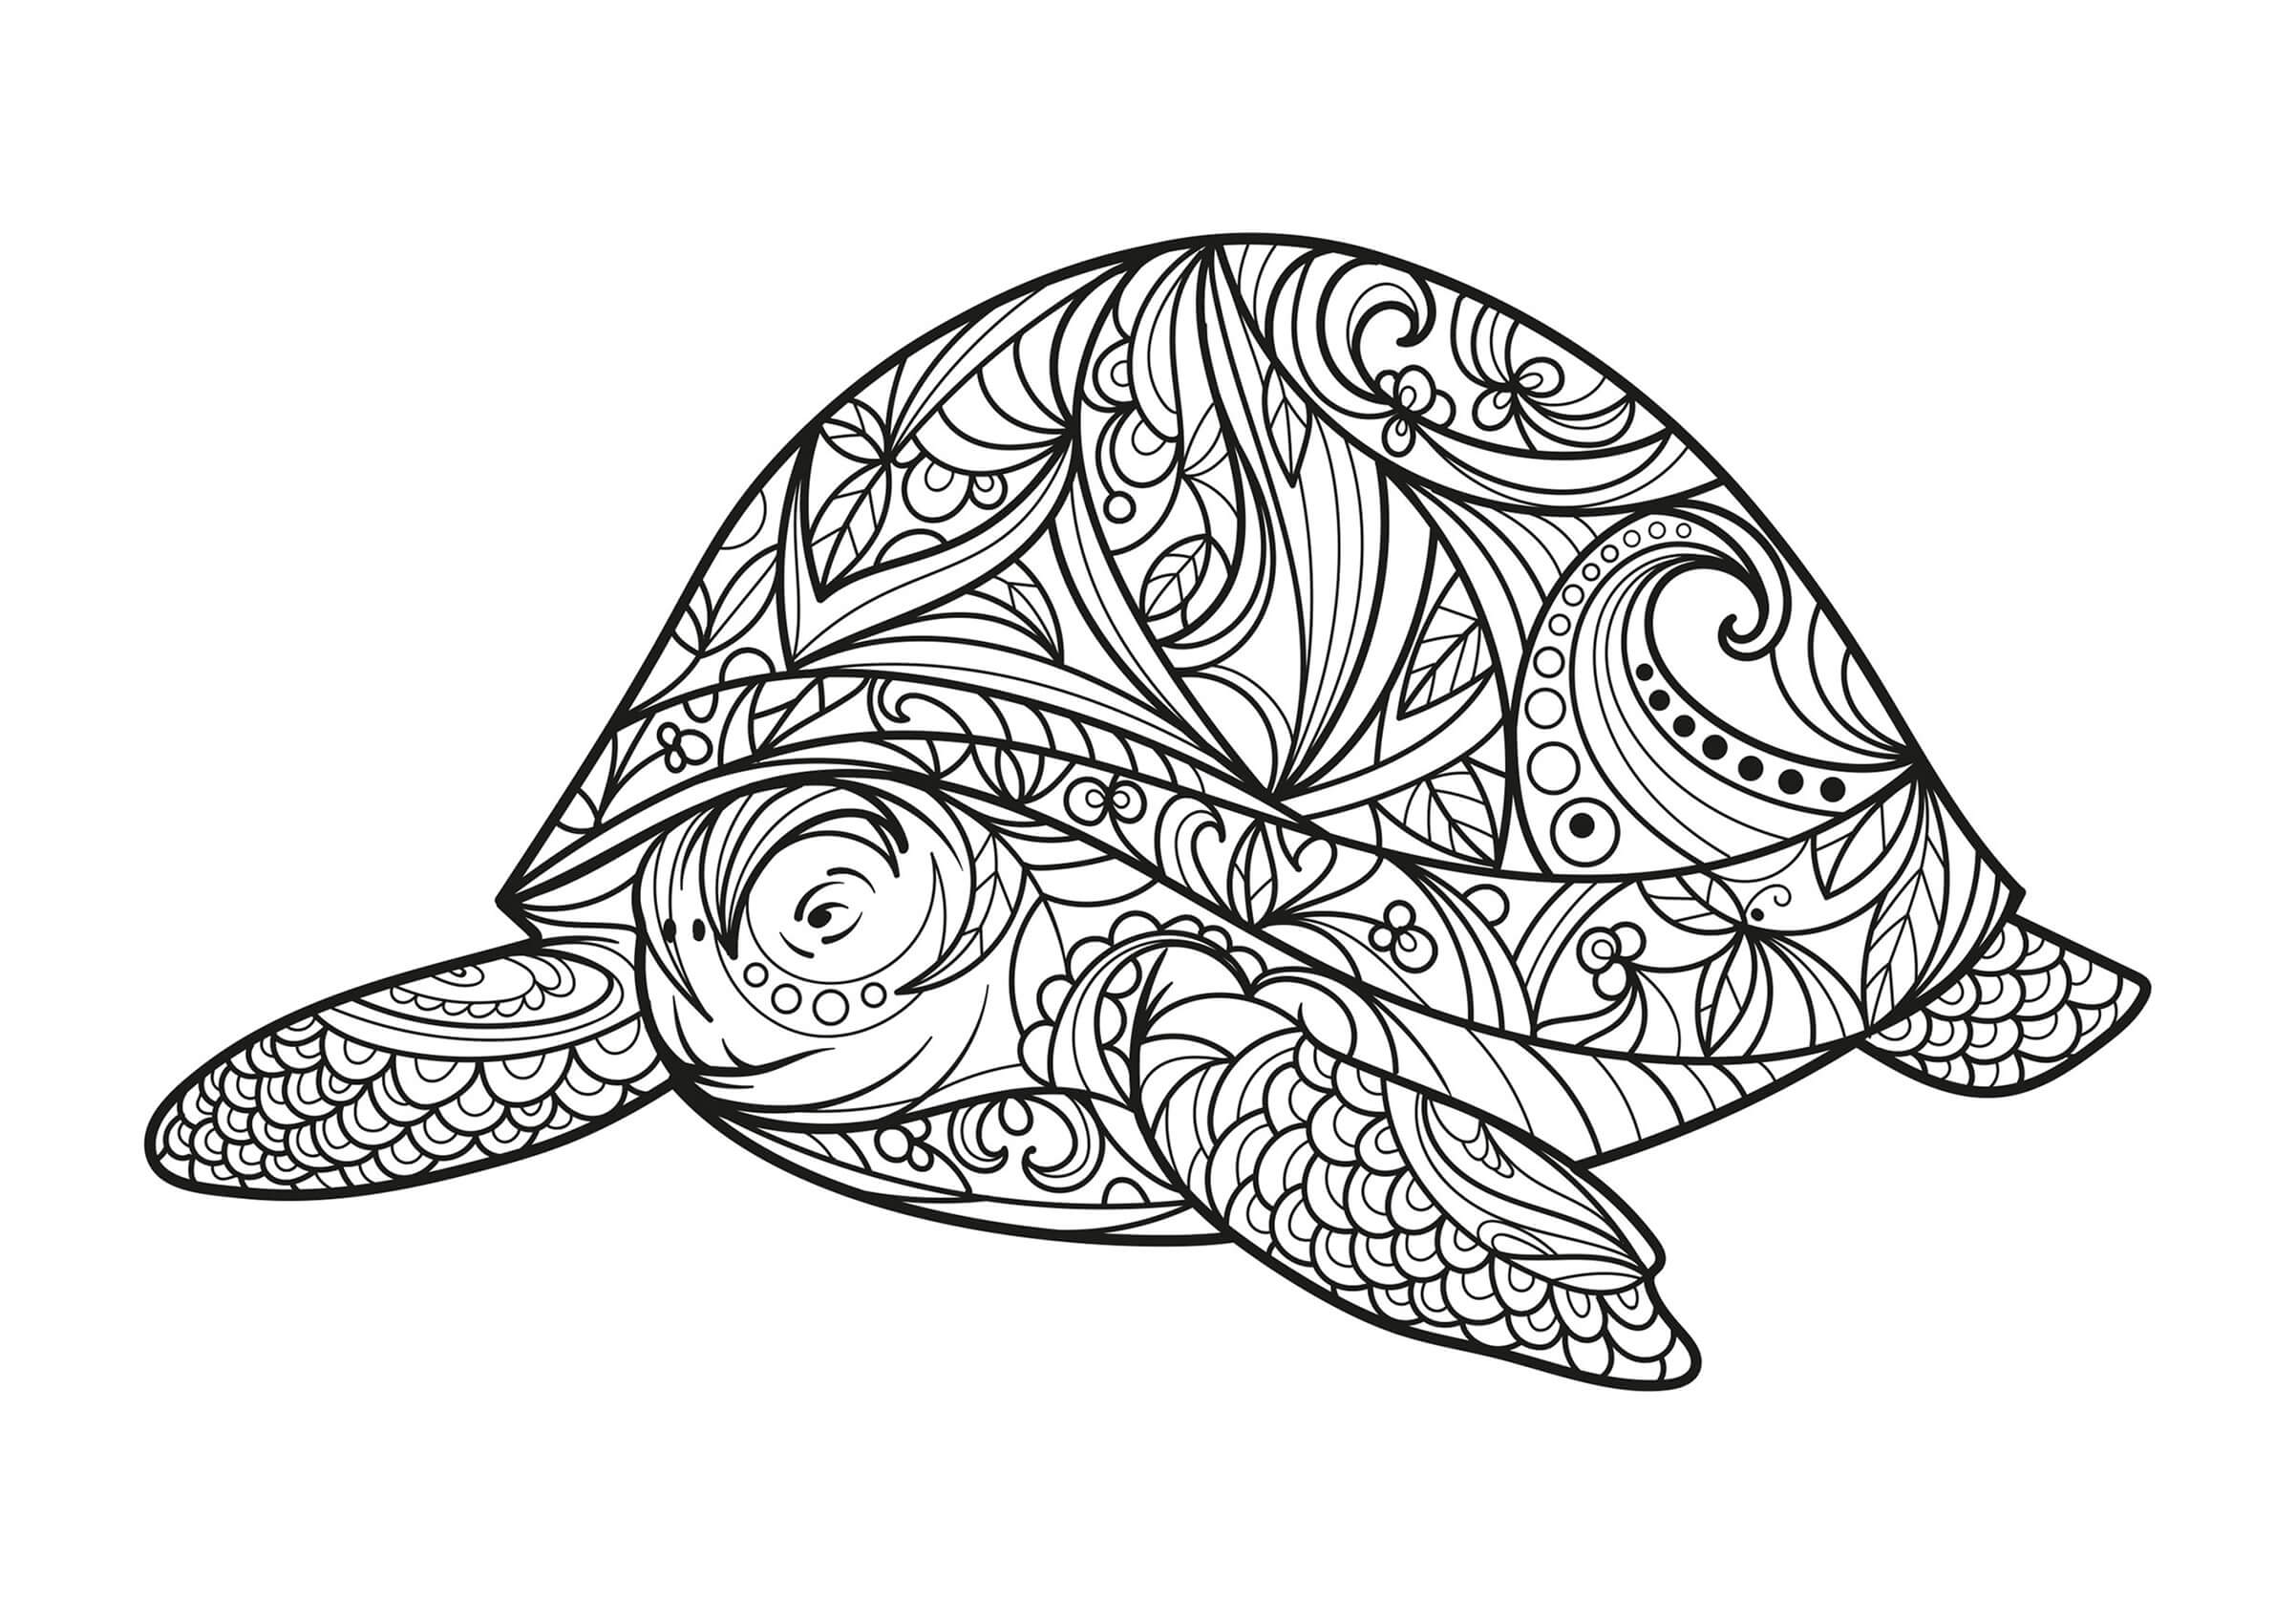 Mandala Turtle Coloring Page - Sheet 10 Mandalas